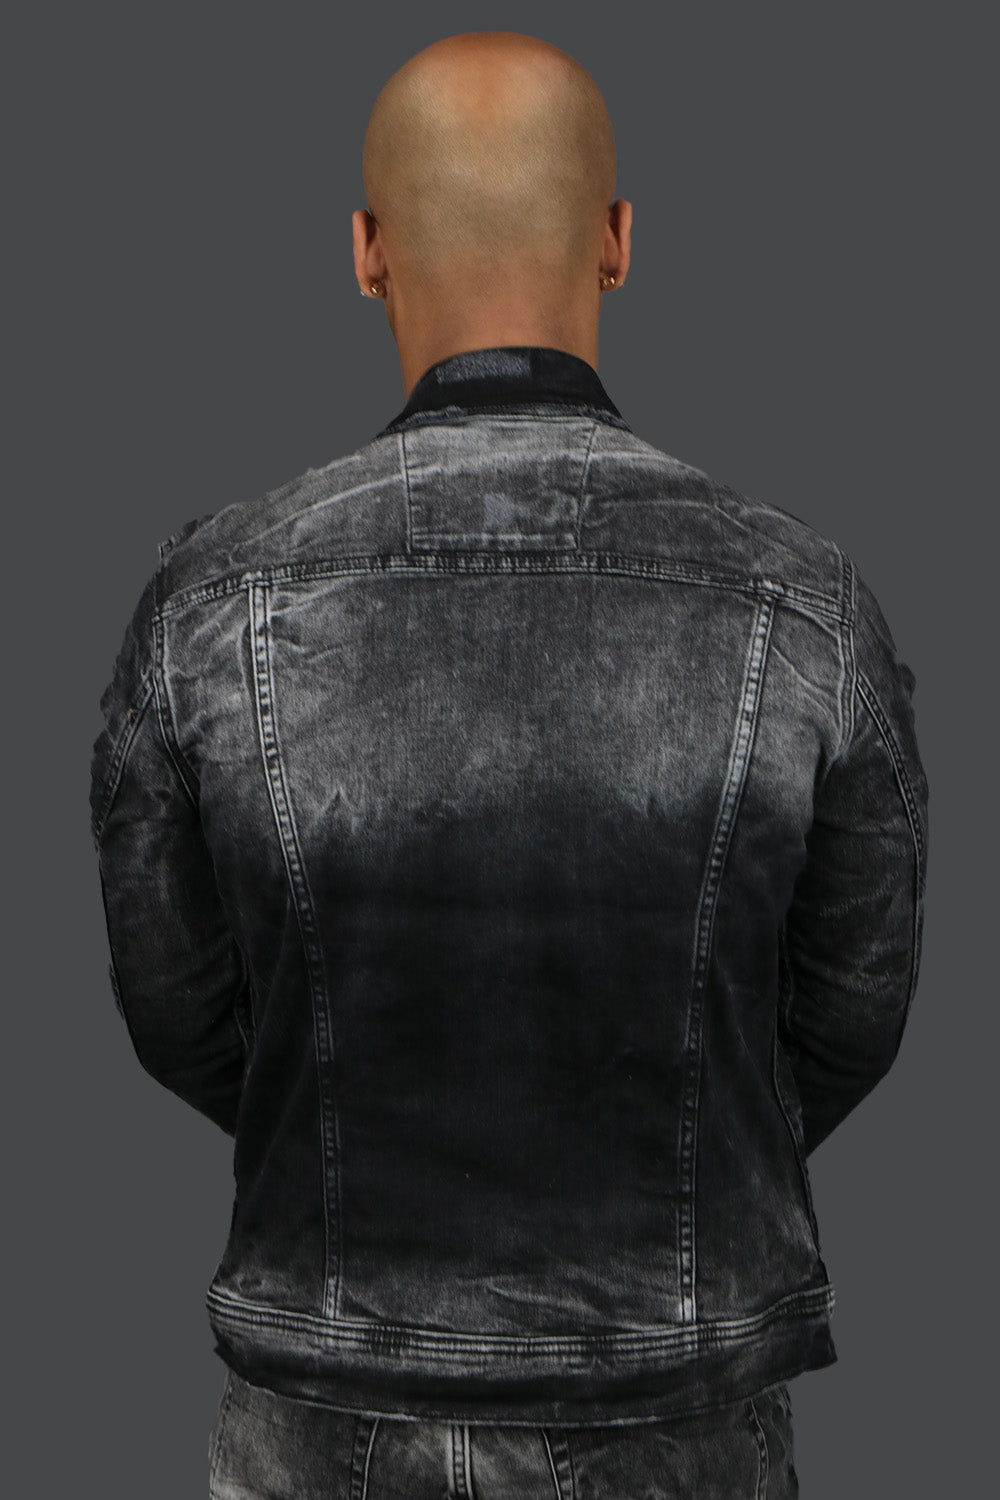 The backside of the Industrial Black Distressed Denim Jacket | Jordan Craig